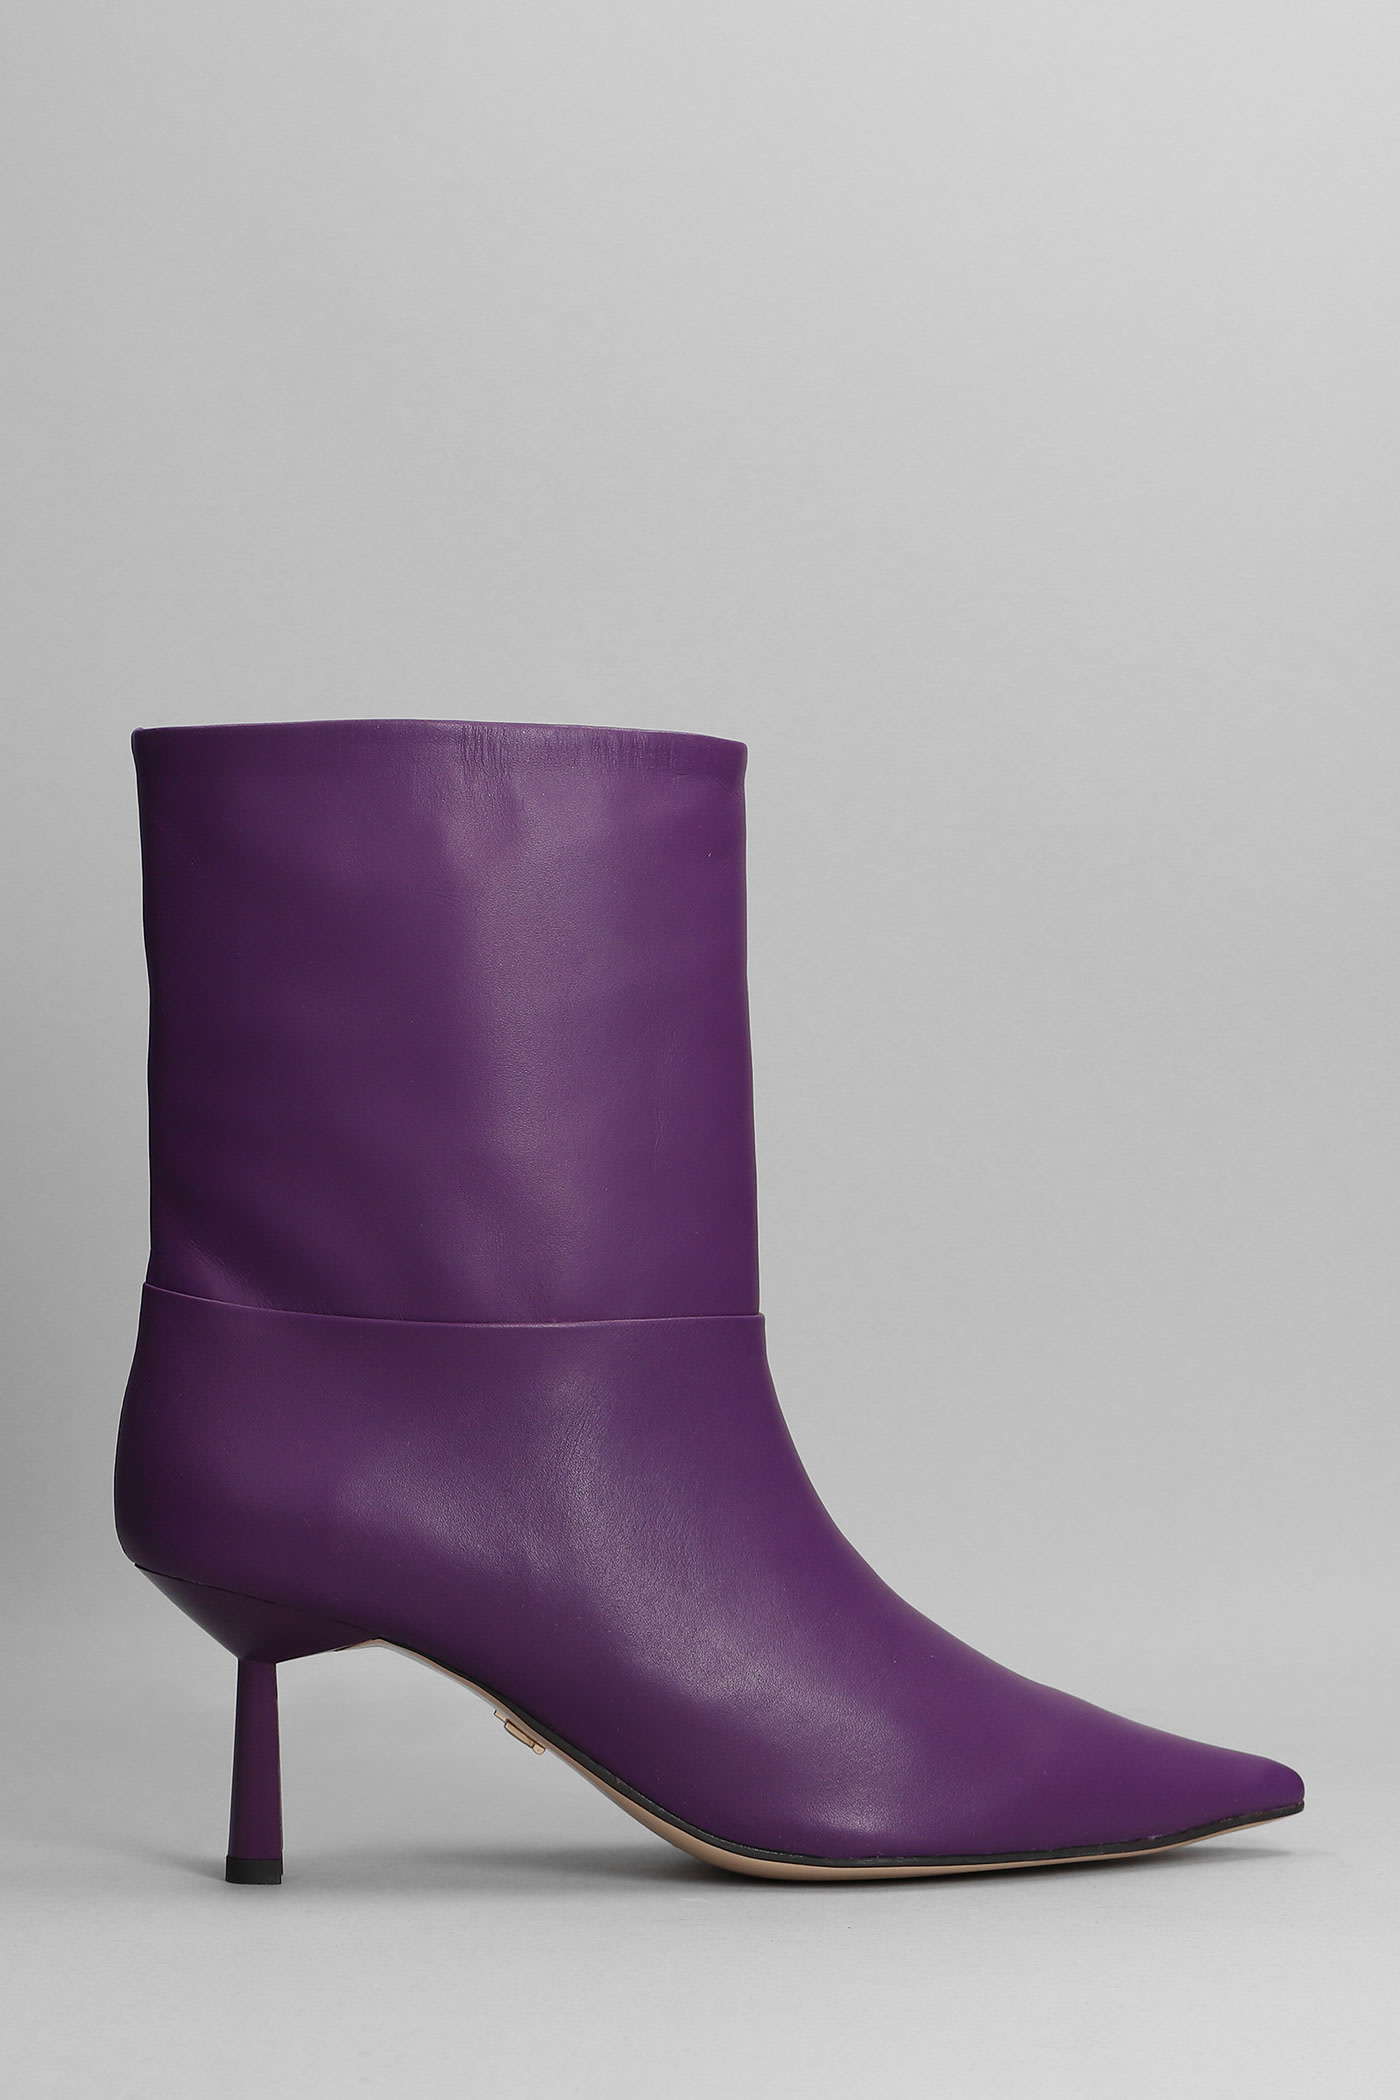 Lola Cruz Low Heels Ankle Boots In Viola Leather